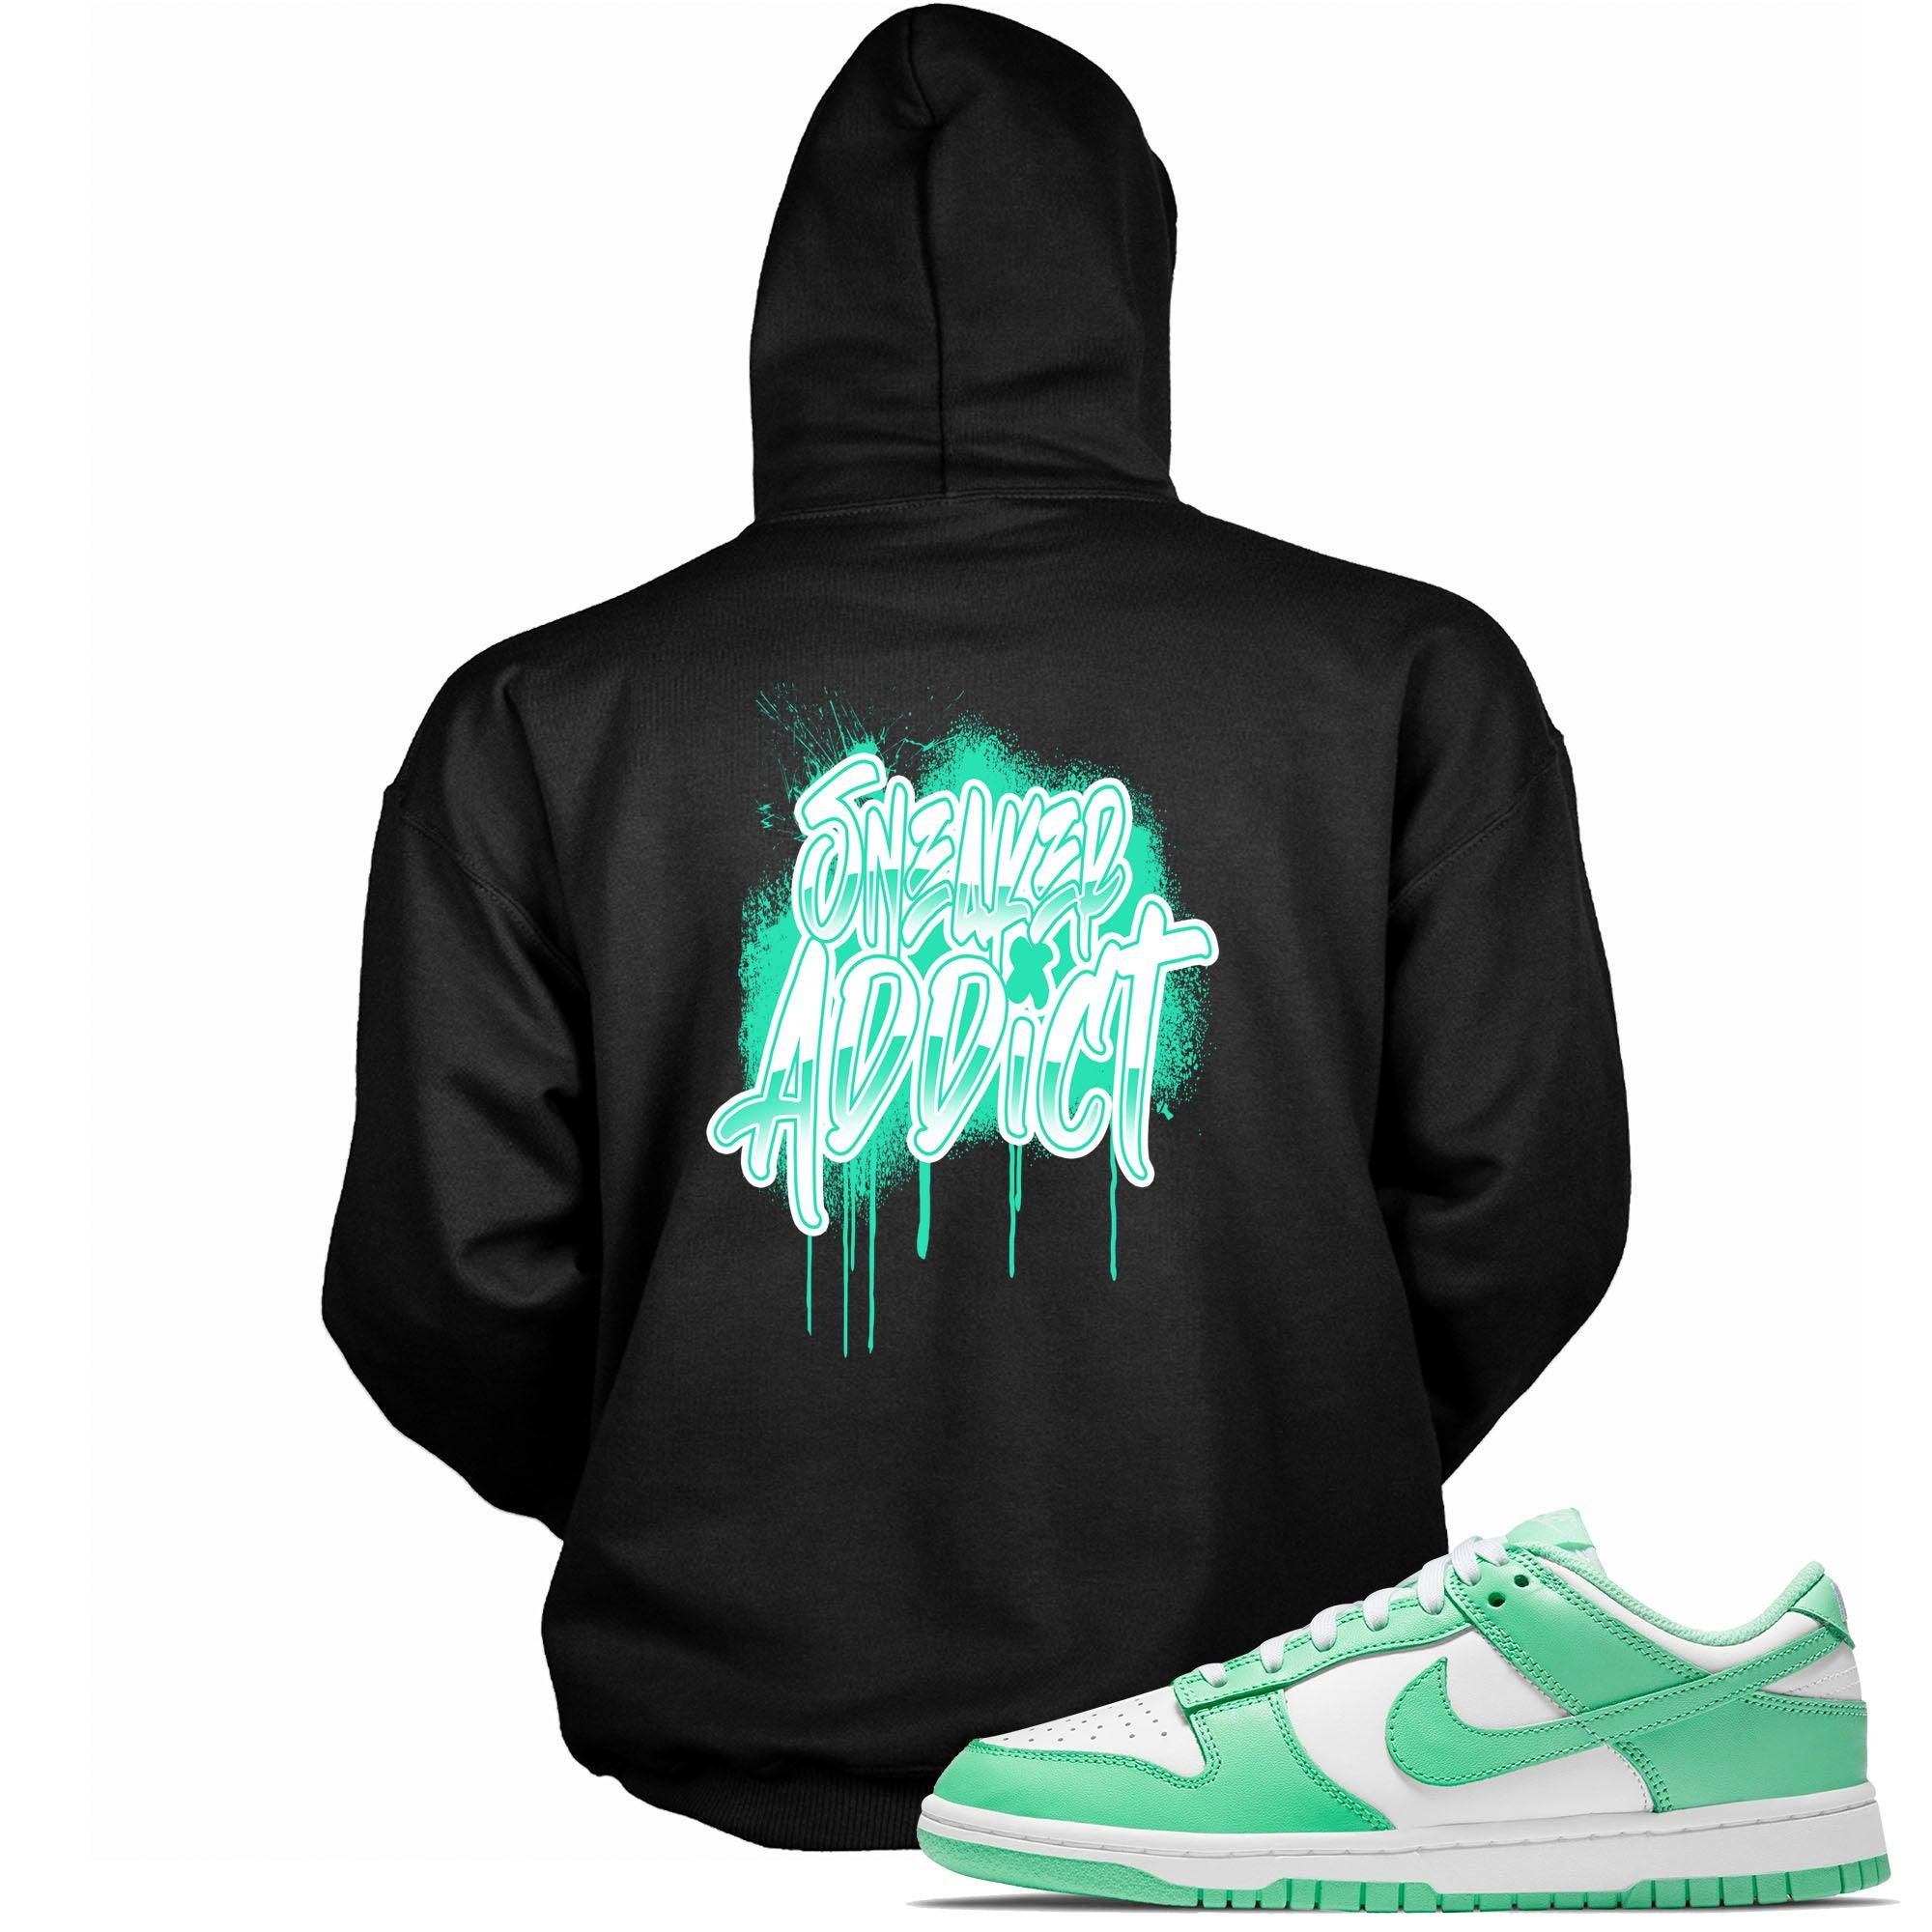 Black Sneaker Addict Hoodie Nike Dunks Low Green Glow photo